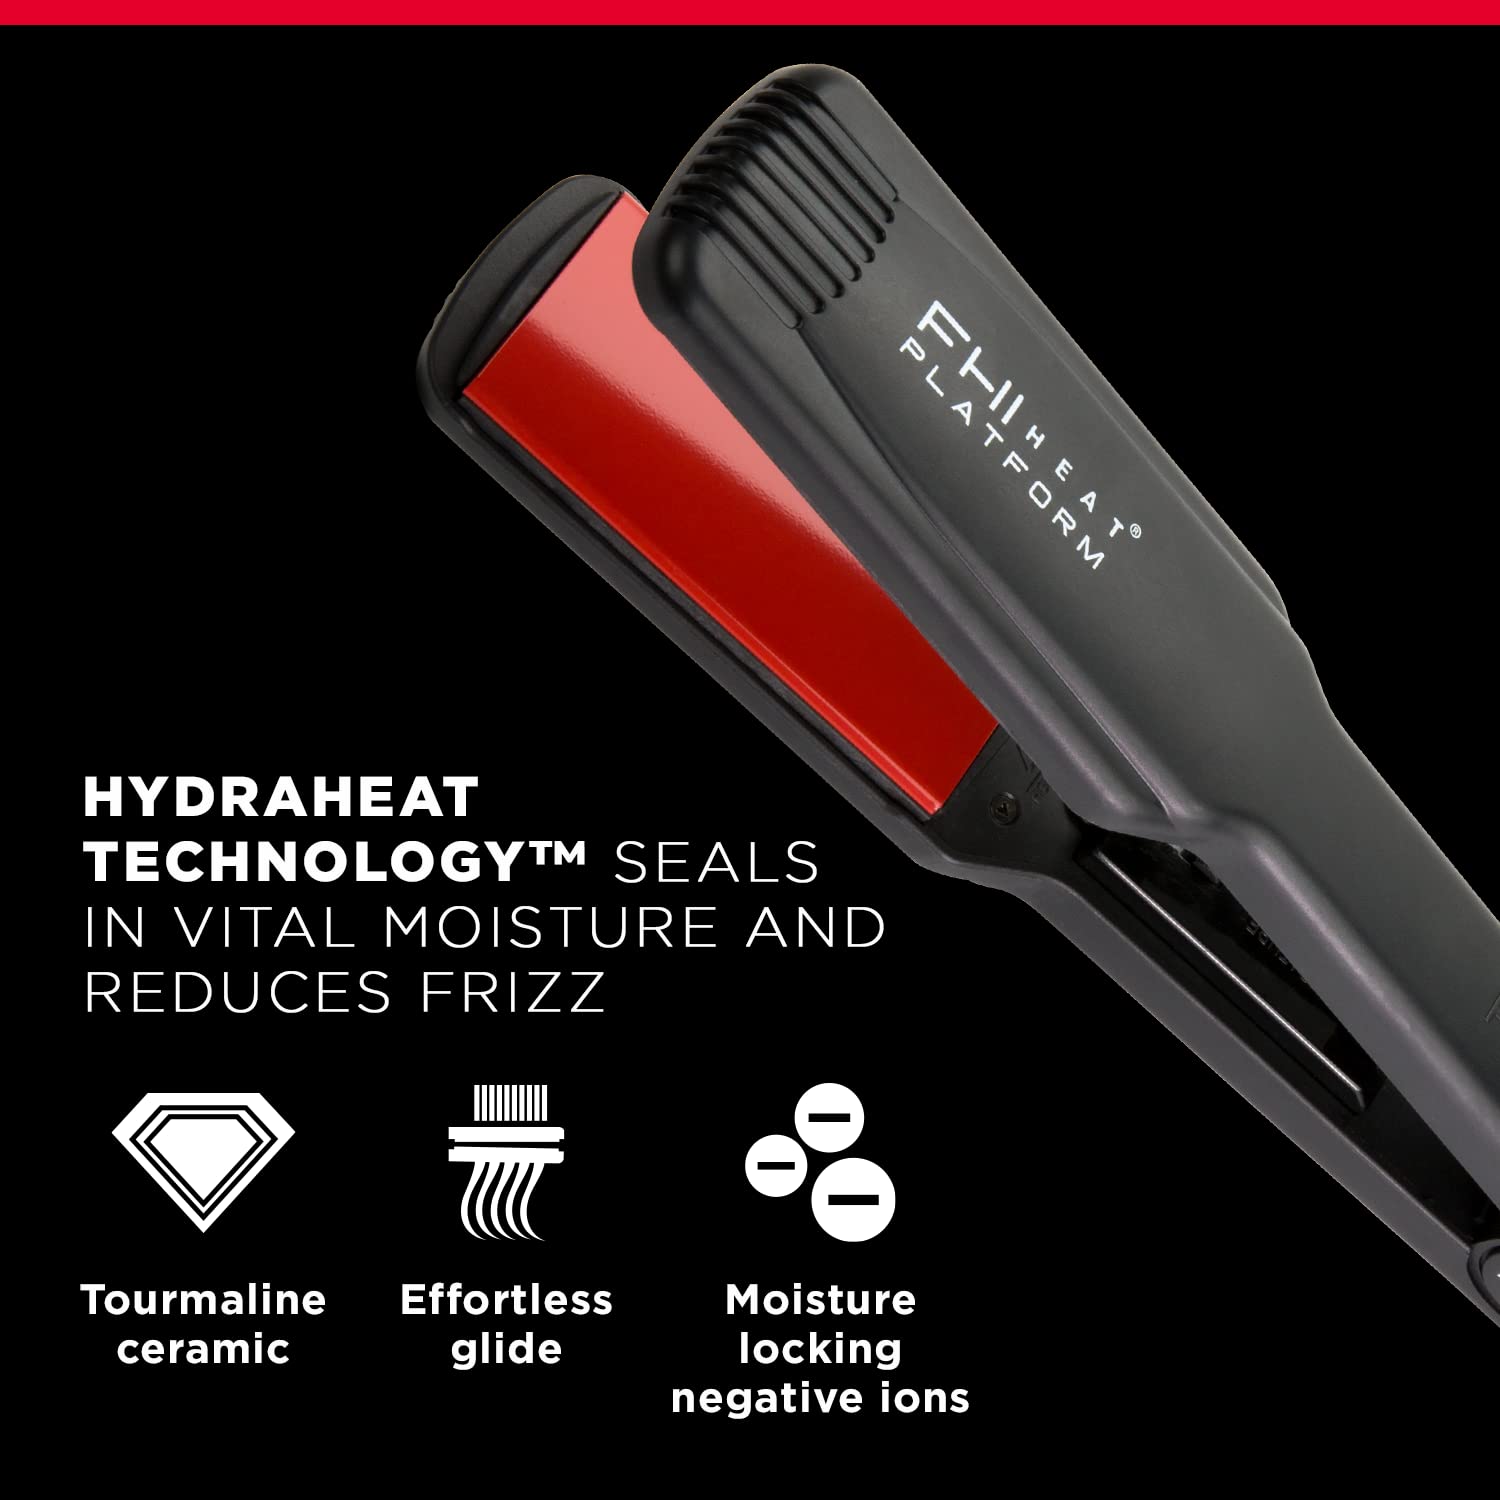 FHI Heat Platform Tourmaline Ceramic Professional Hair Styling Iron, 1-3/4 Inches